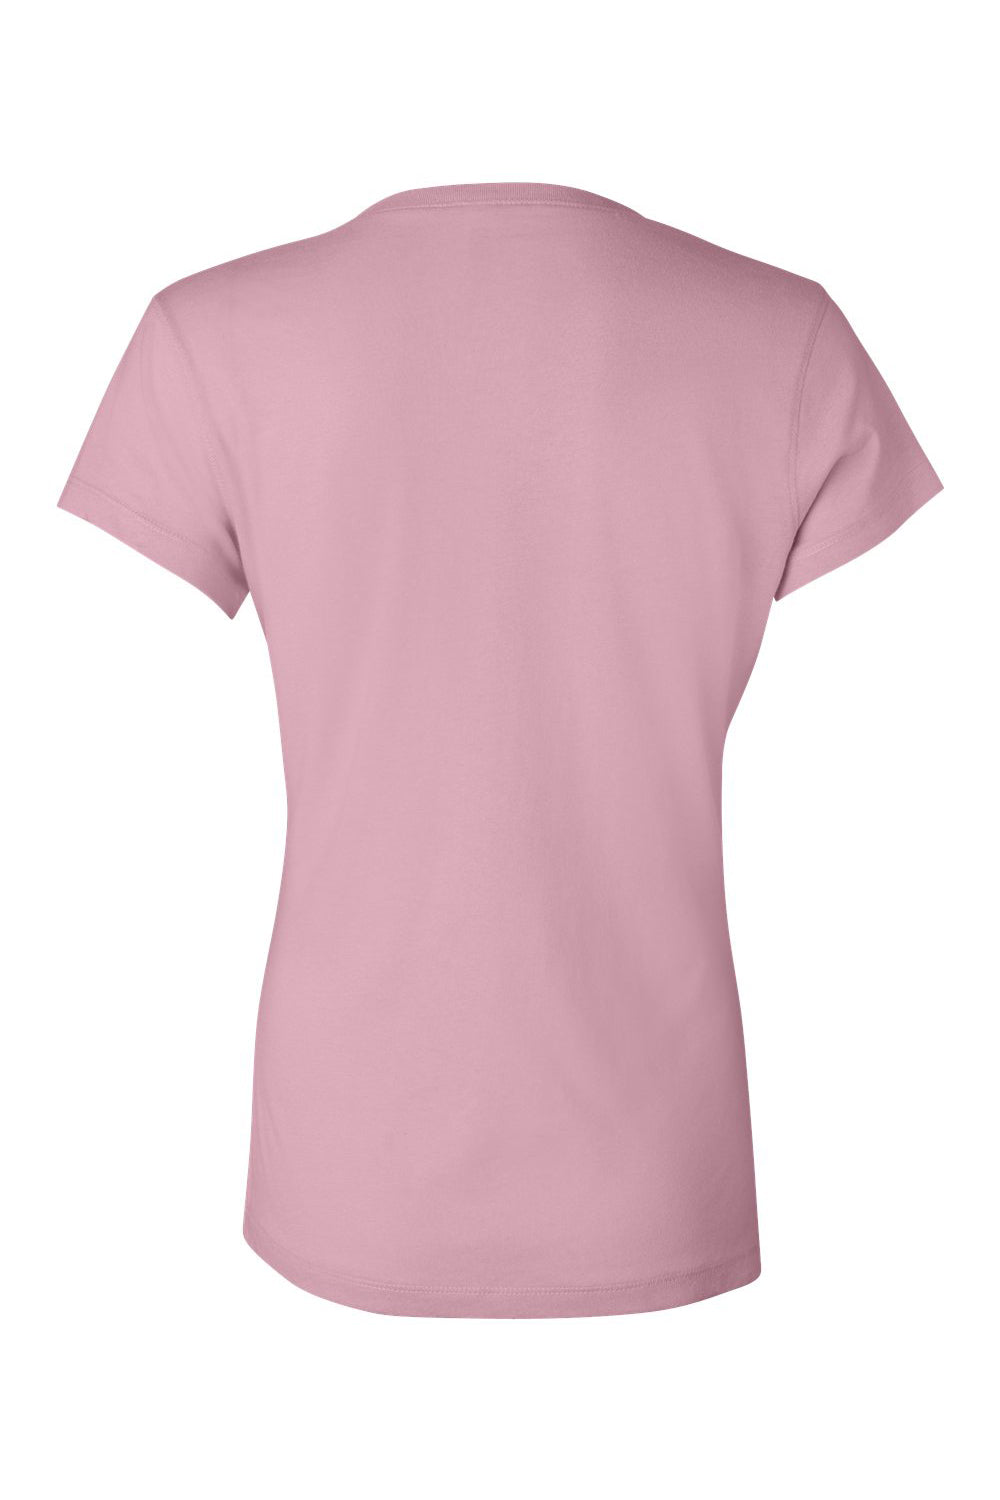 Bella + Canvas B6005/6005 Womens Jersey Short Sleeve V-Neck T-Shirt Pink Flat Back